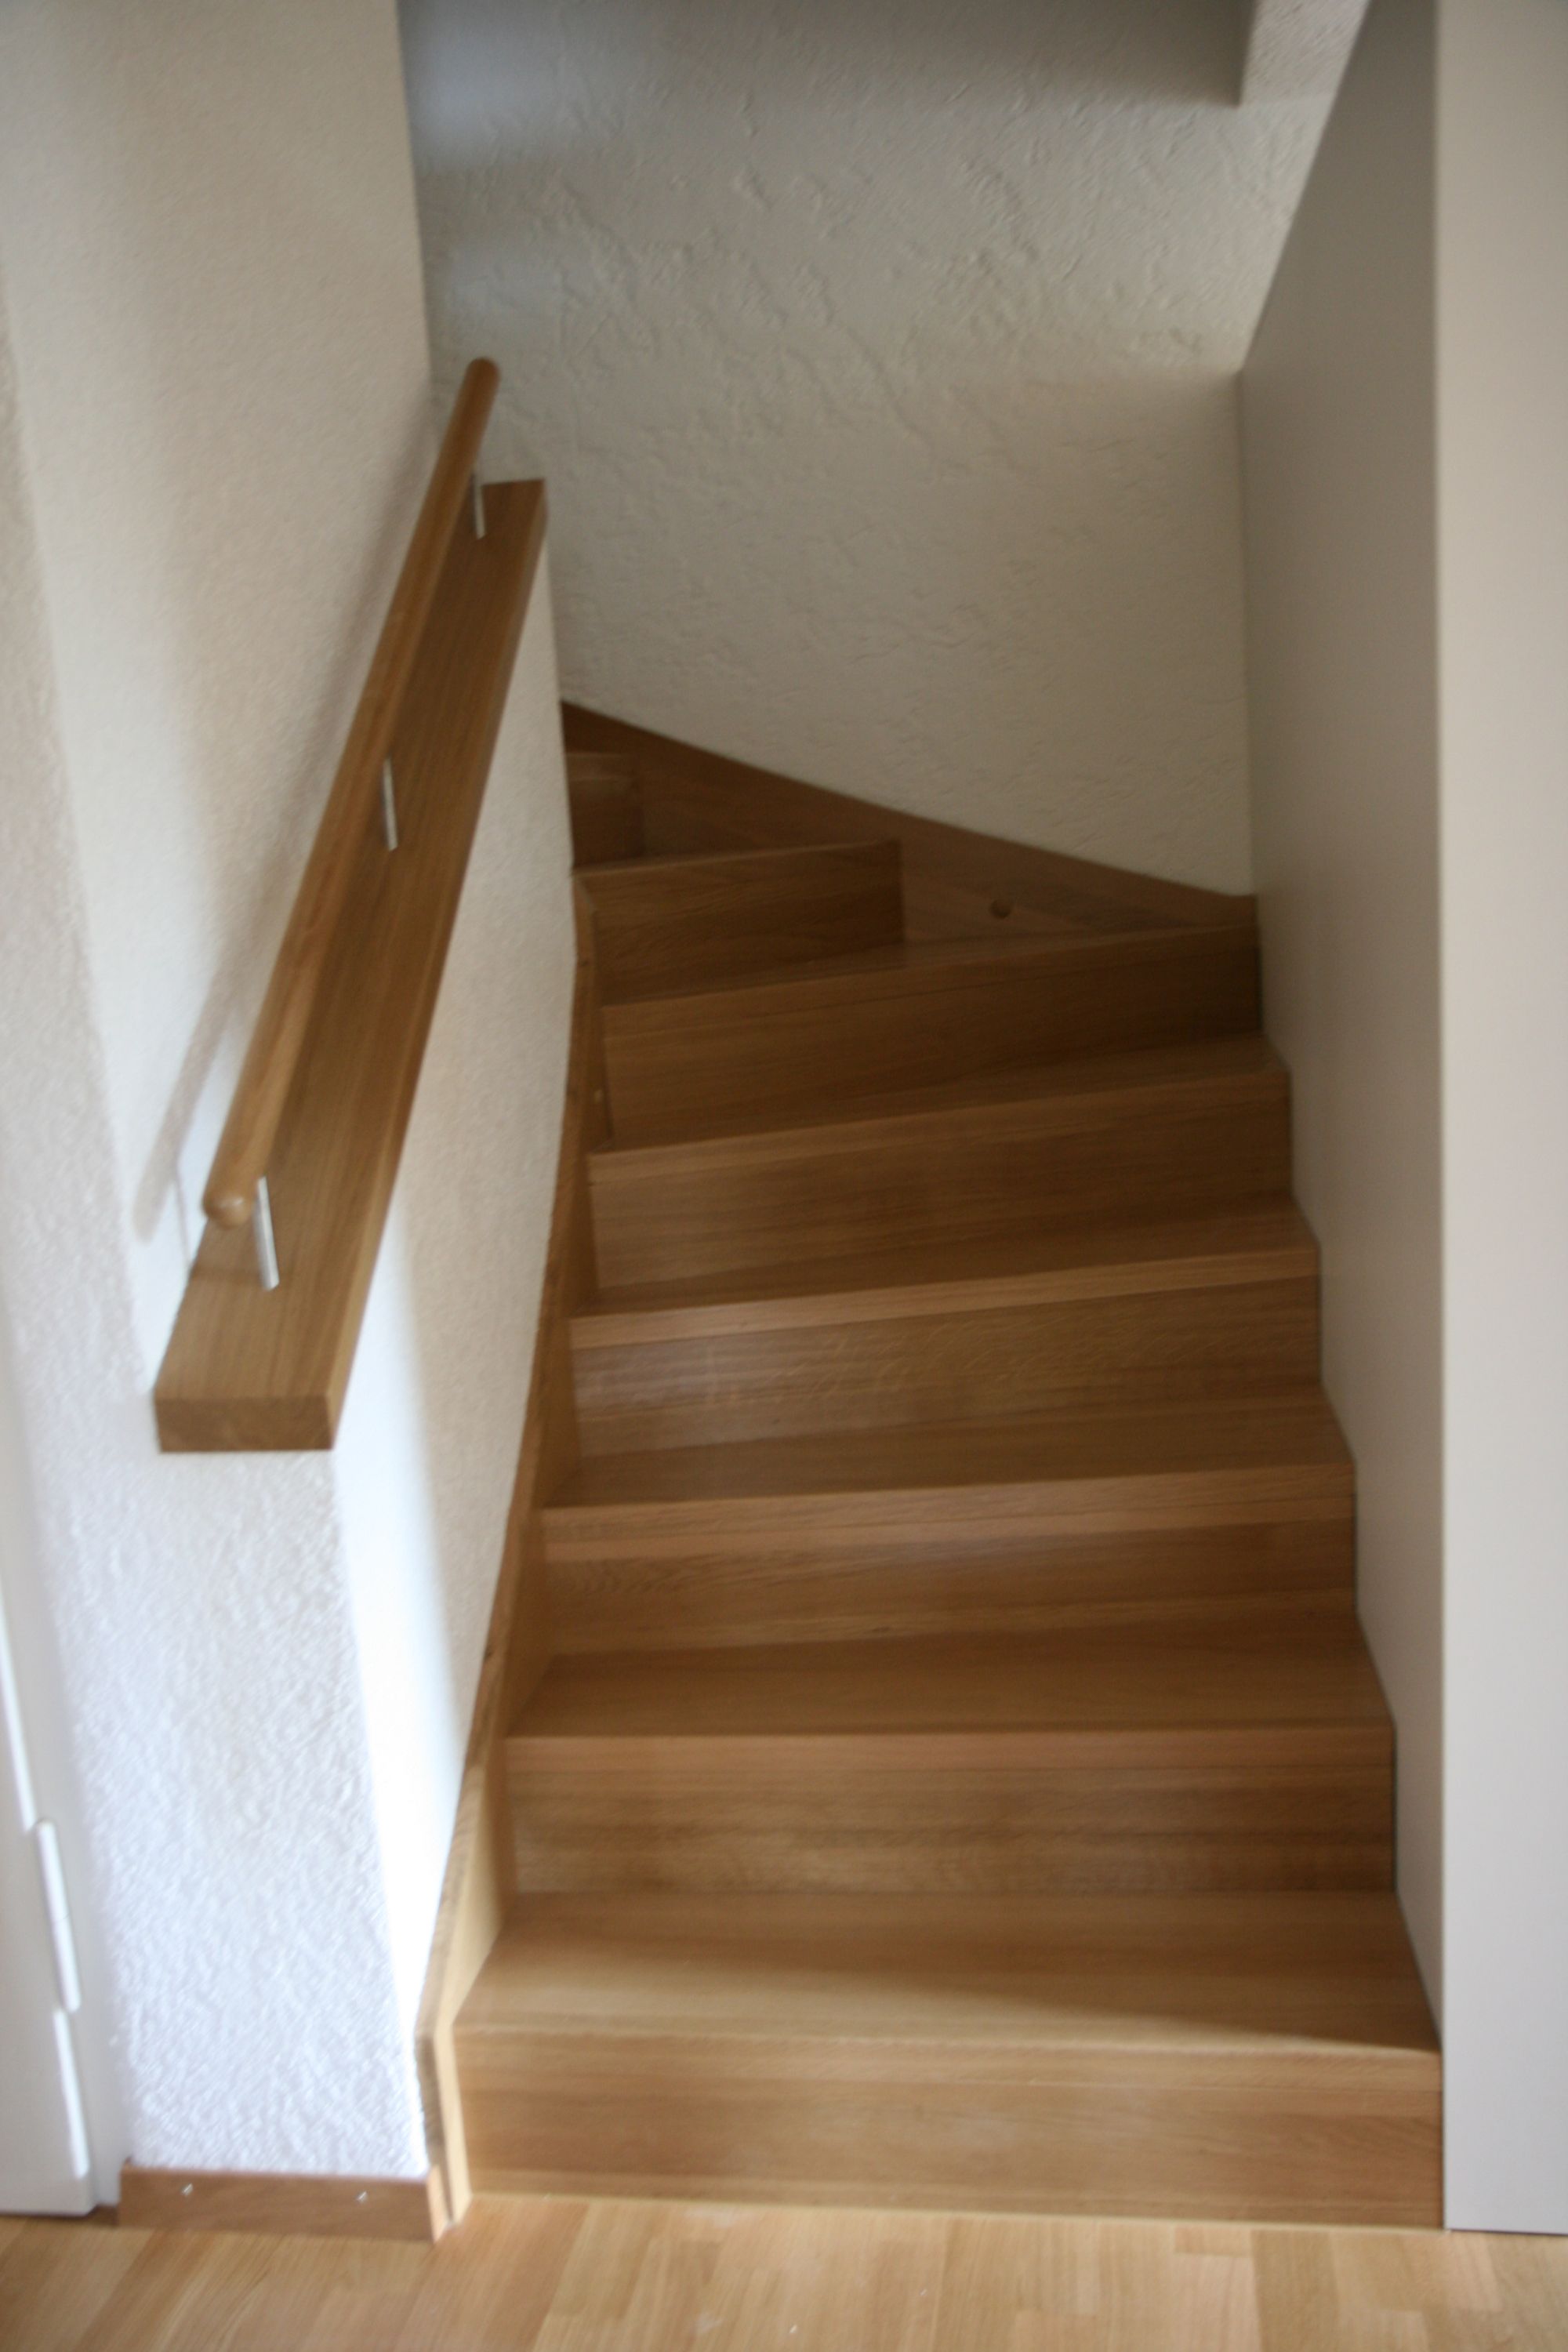 Stair Image 437